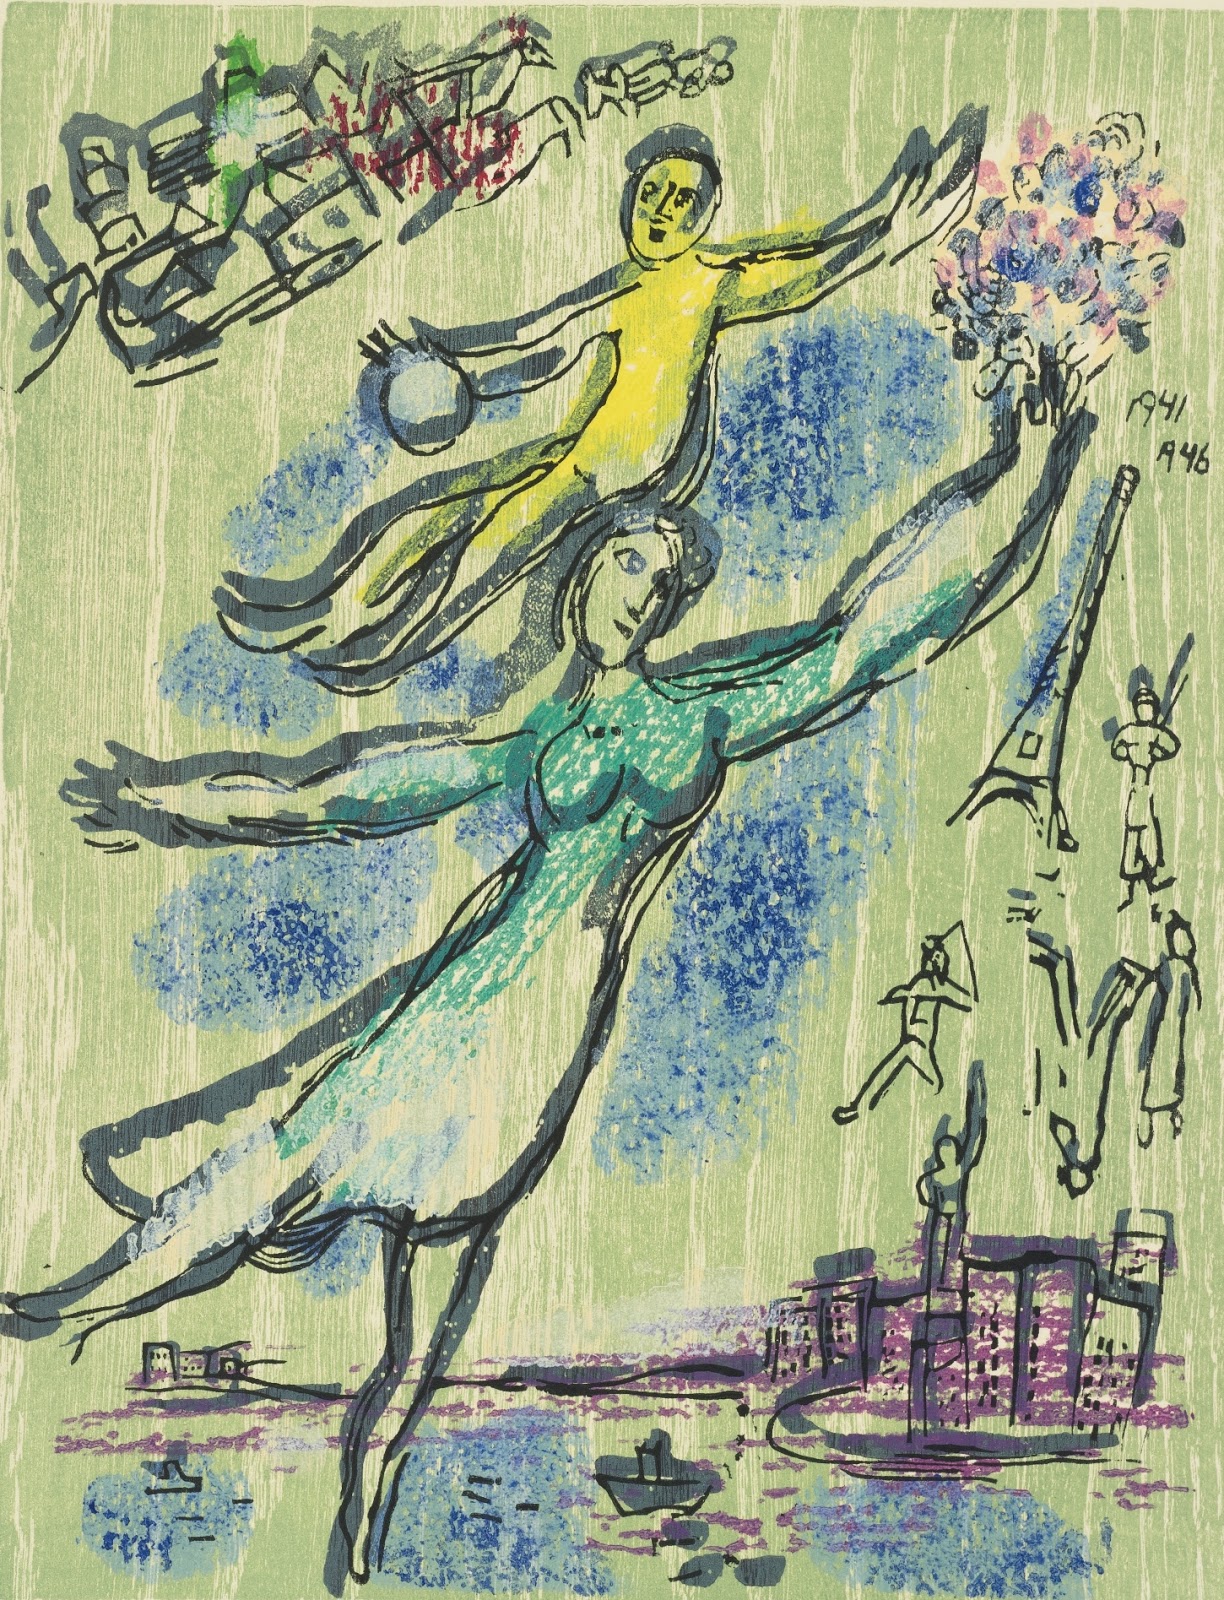 Marc+Chagall-1887-1985 (371).jpg